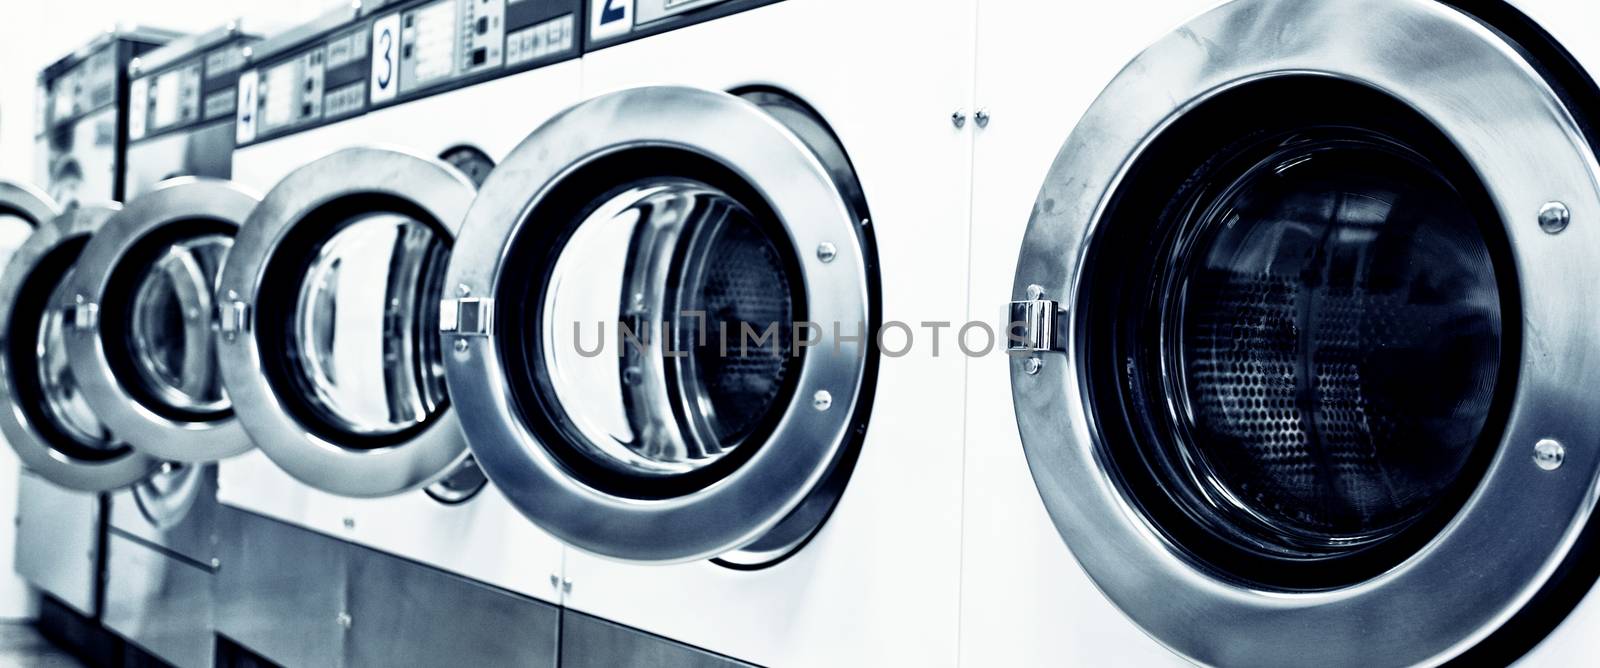 washing machines by vwalakte